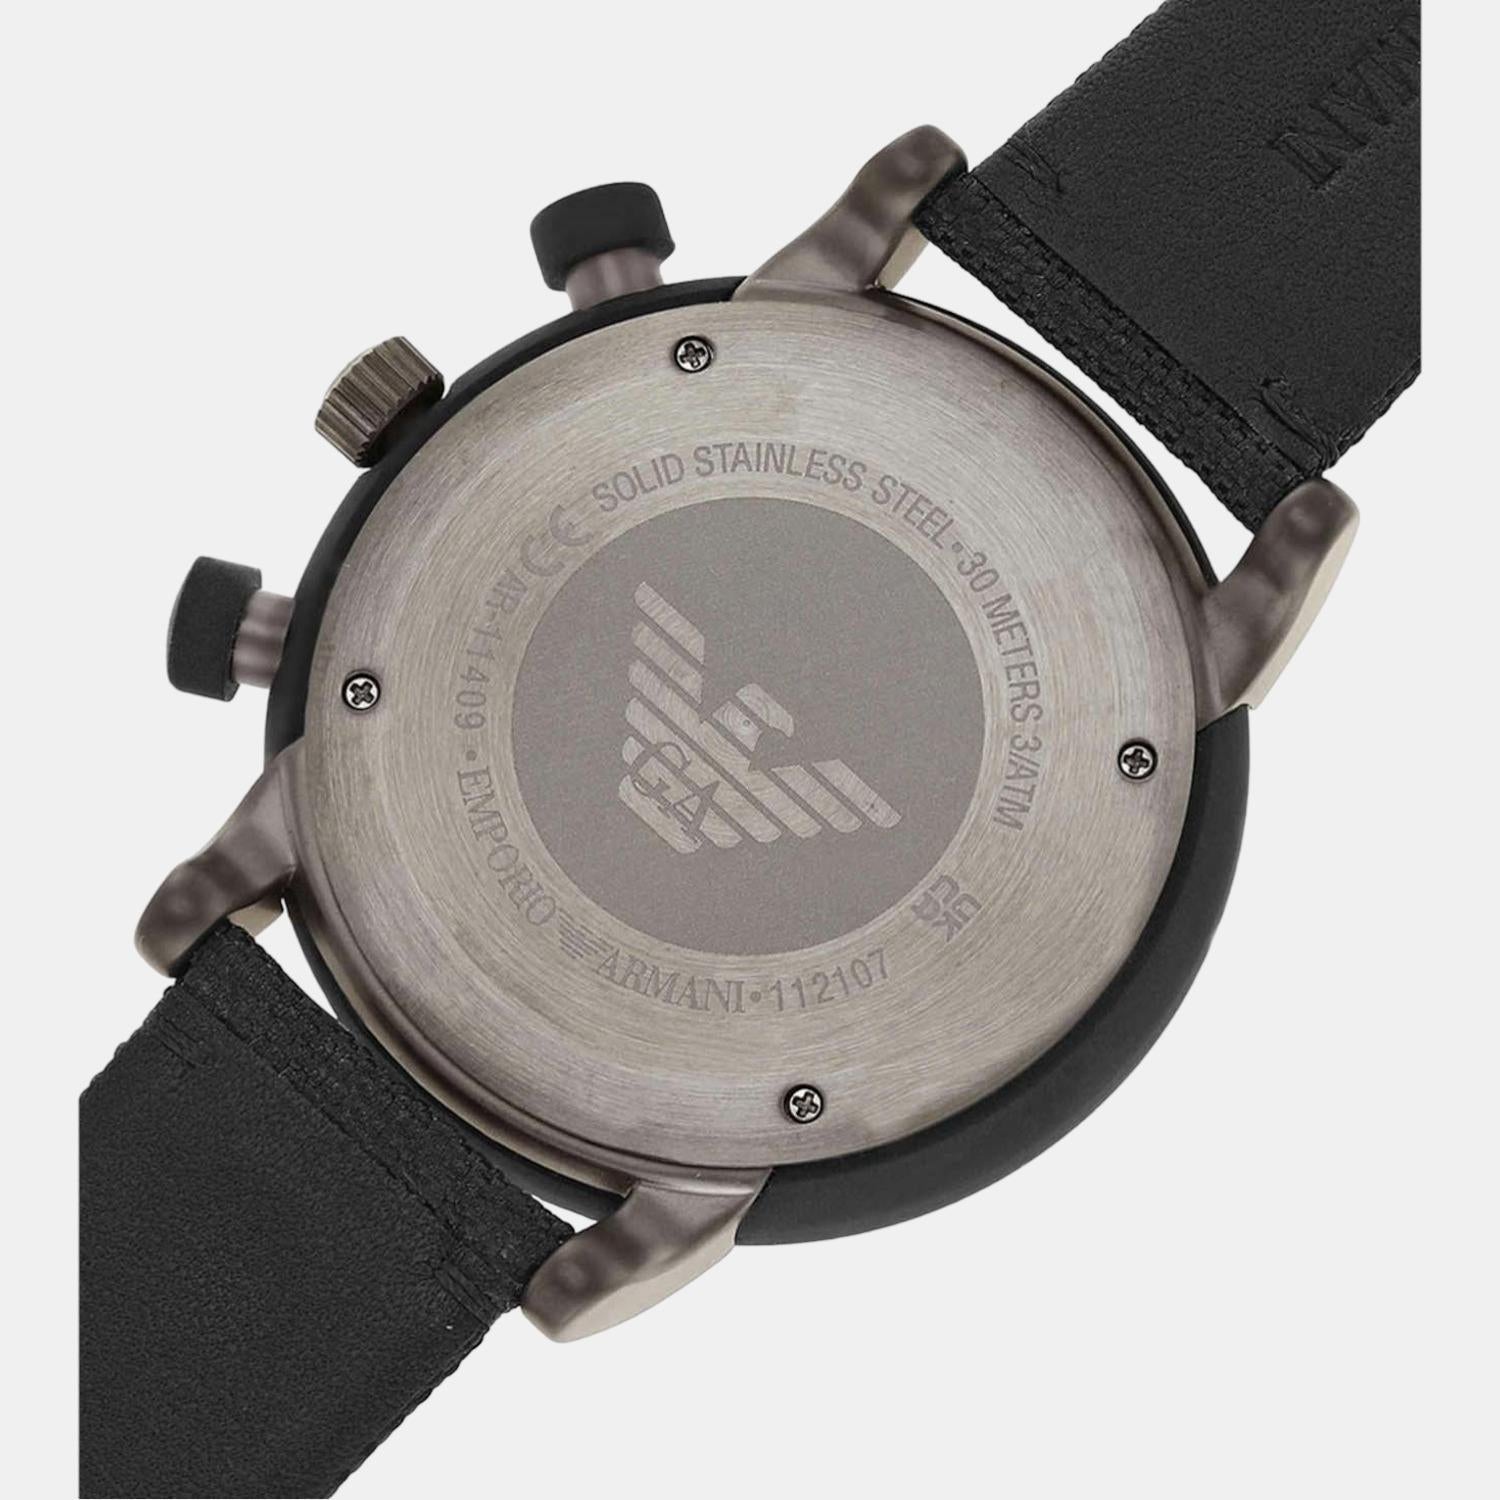 Emporio Armani Male Analog Stainless Steel Watch | Emporio Armani